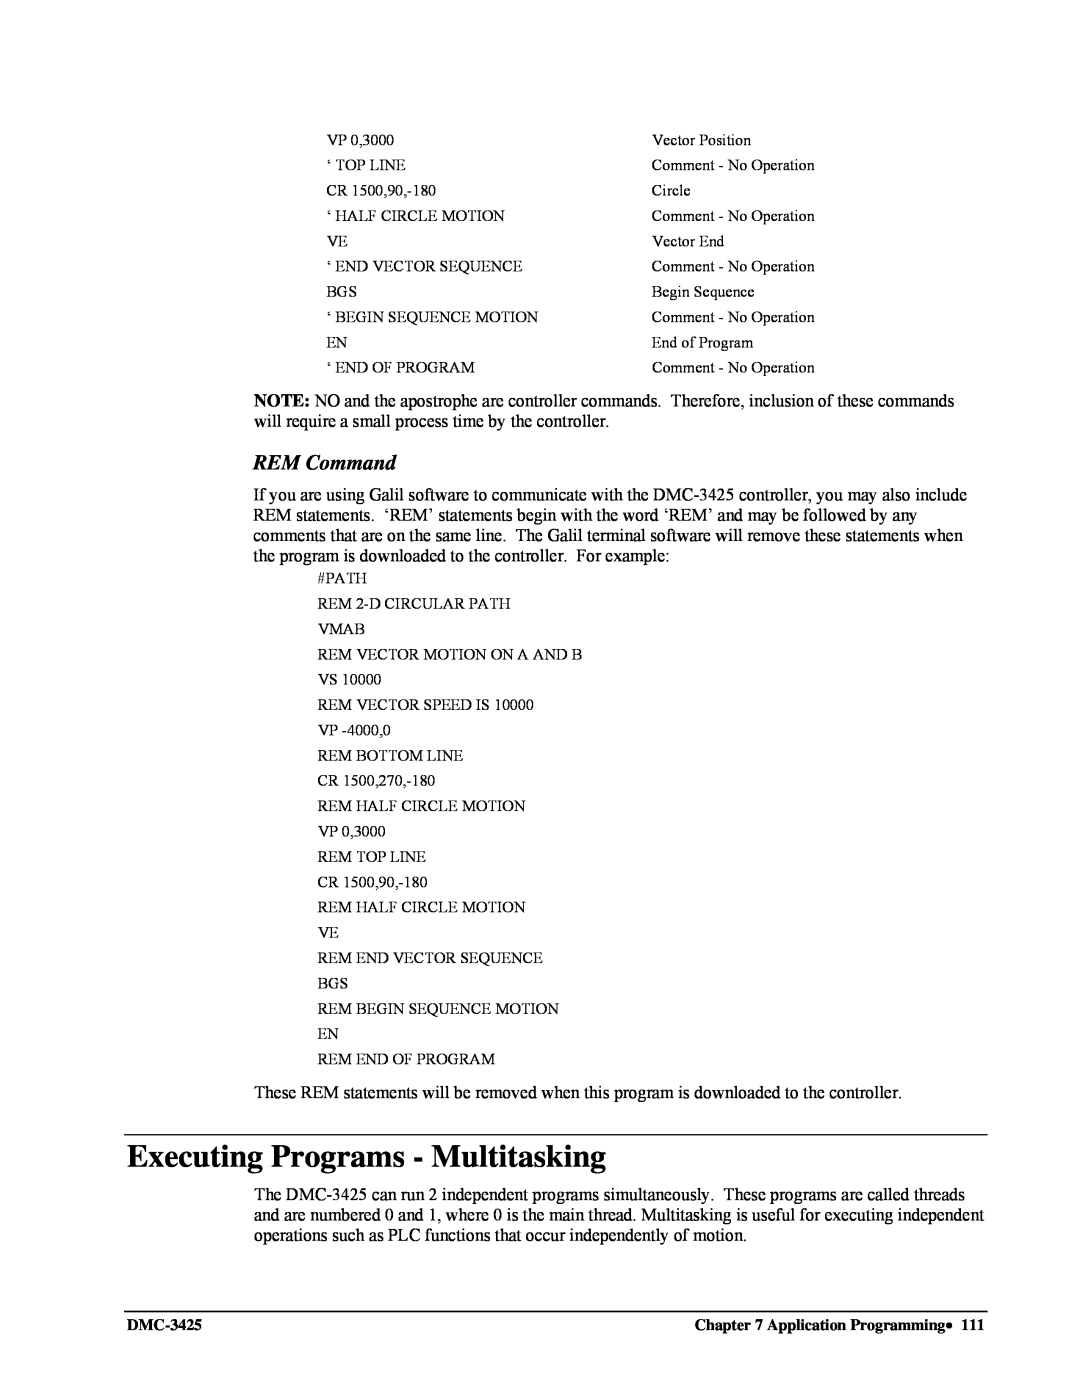 Galil DMC-3425 user manual Executing Programs - Multitasking, REM Command 